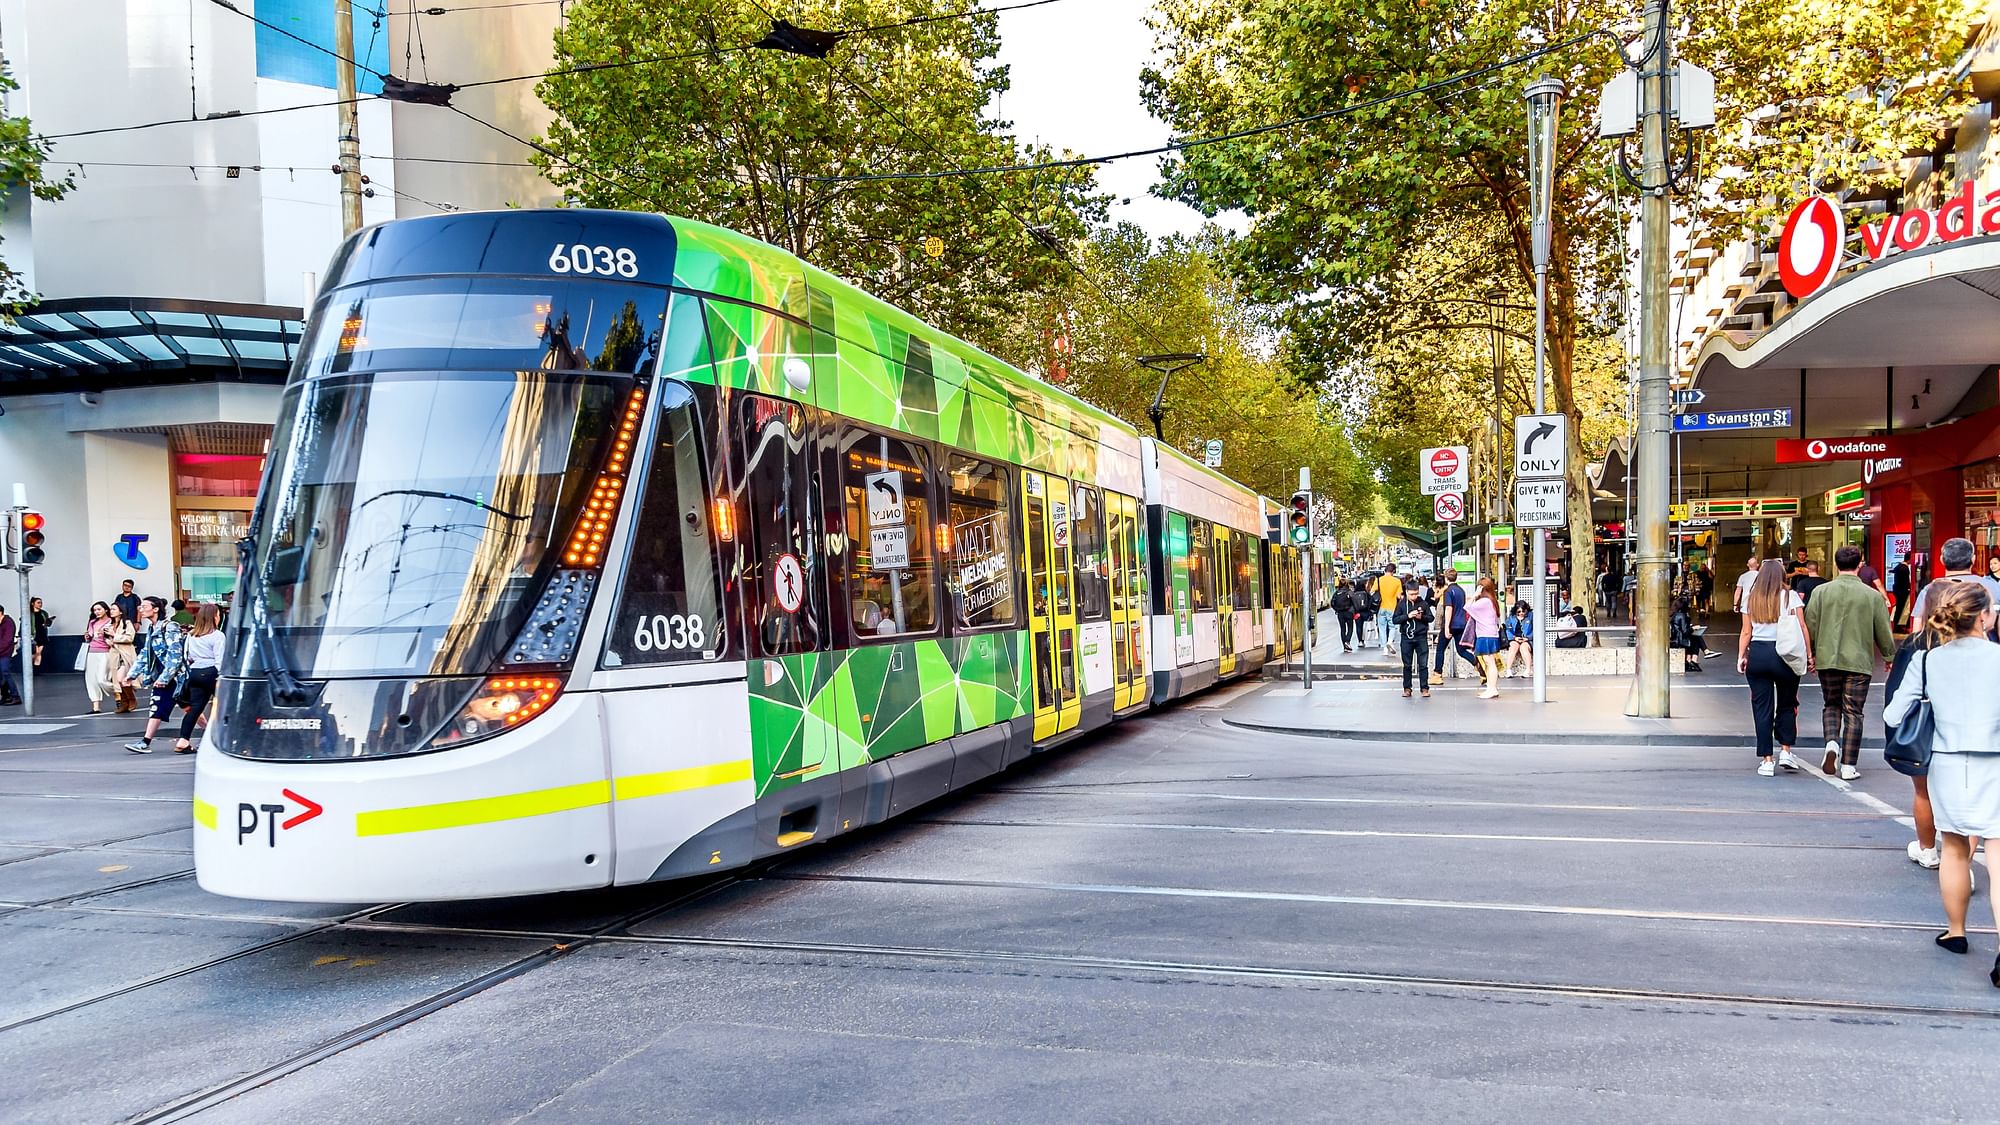 <div class="paragraphs"><p>A Melbourne city tram. Image used for representational purposes only.&nbsp;</p></div>